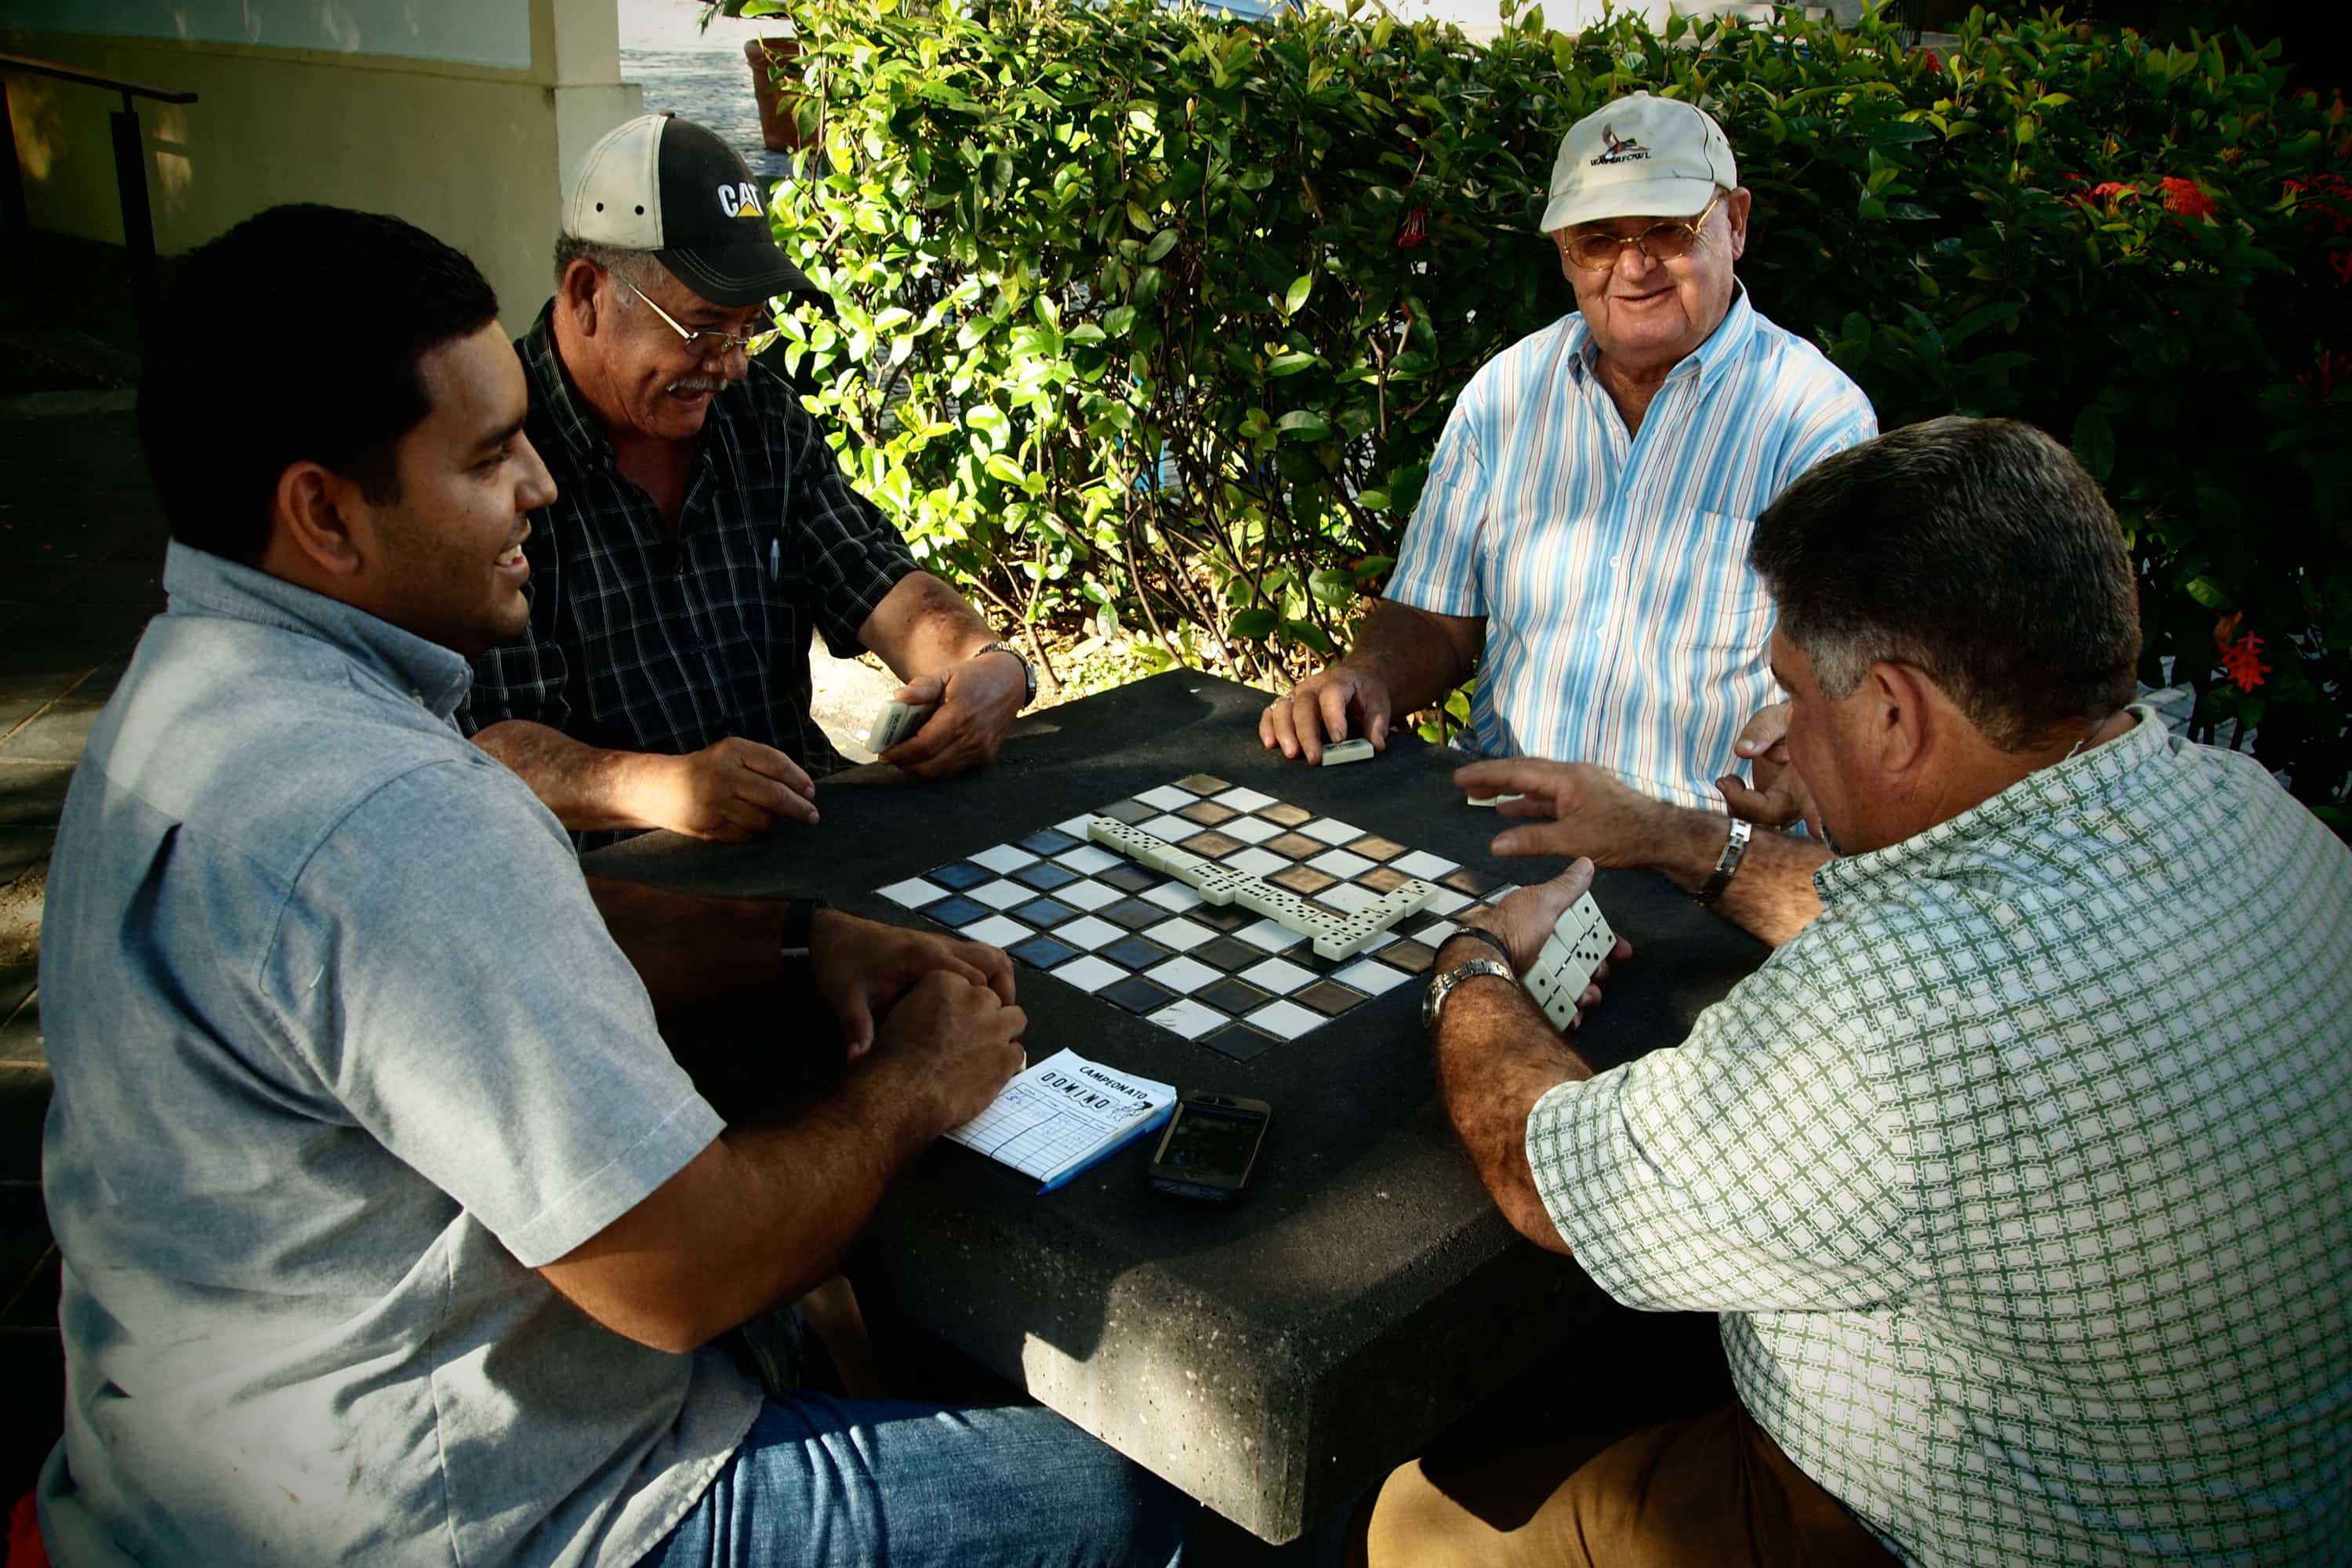 Dominoes in Old San Juan | SBPR